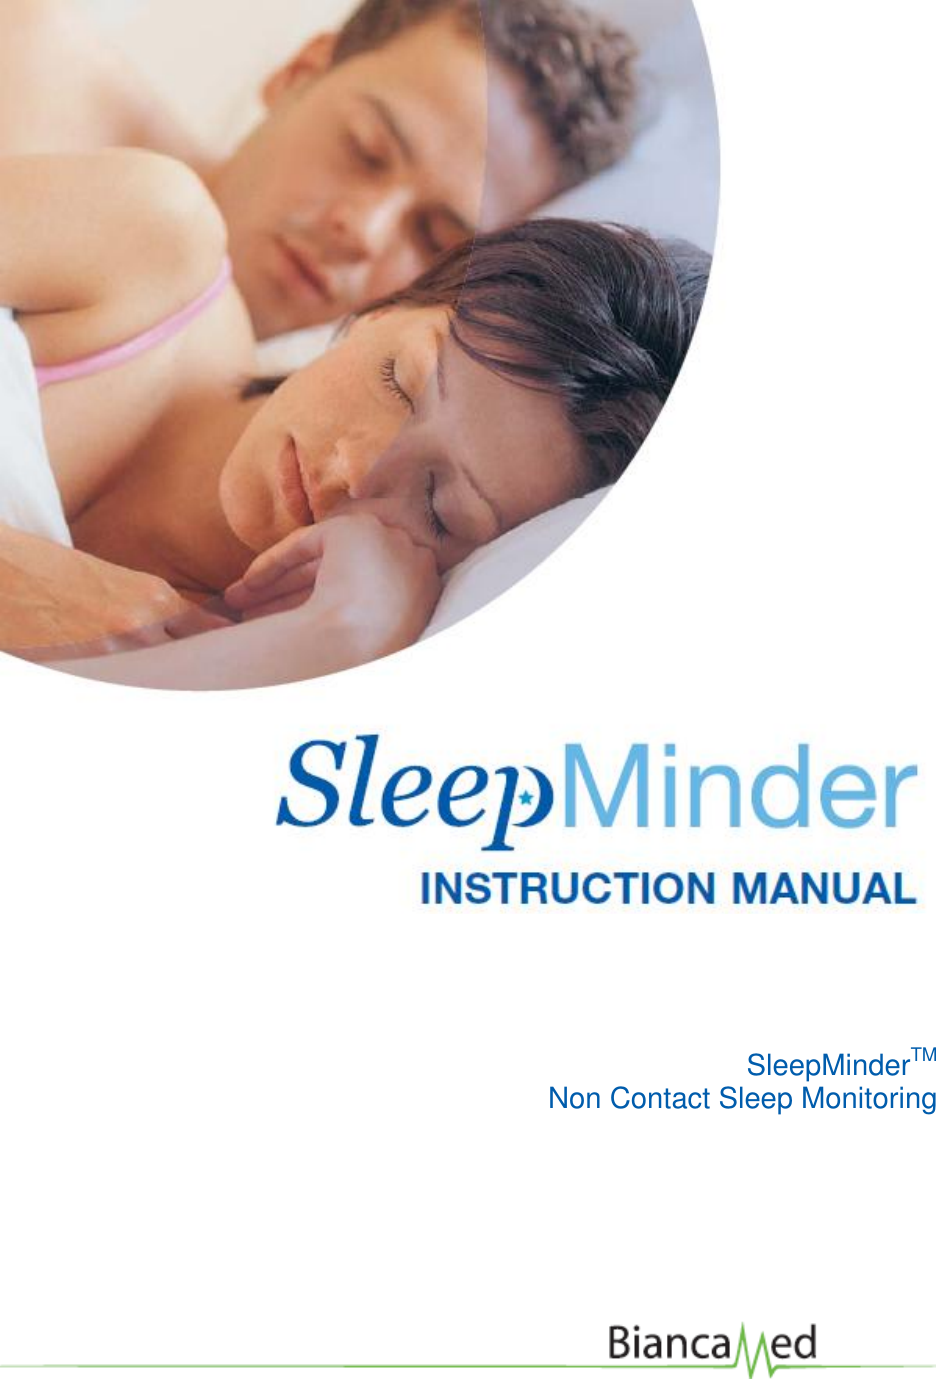      SleepMinderTM Non Contact Sleep Monitoring          